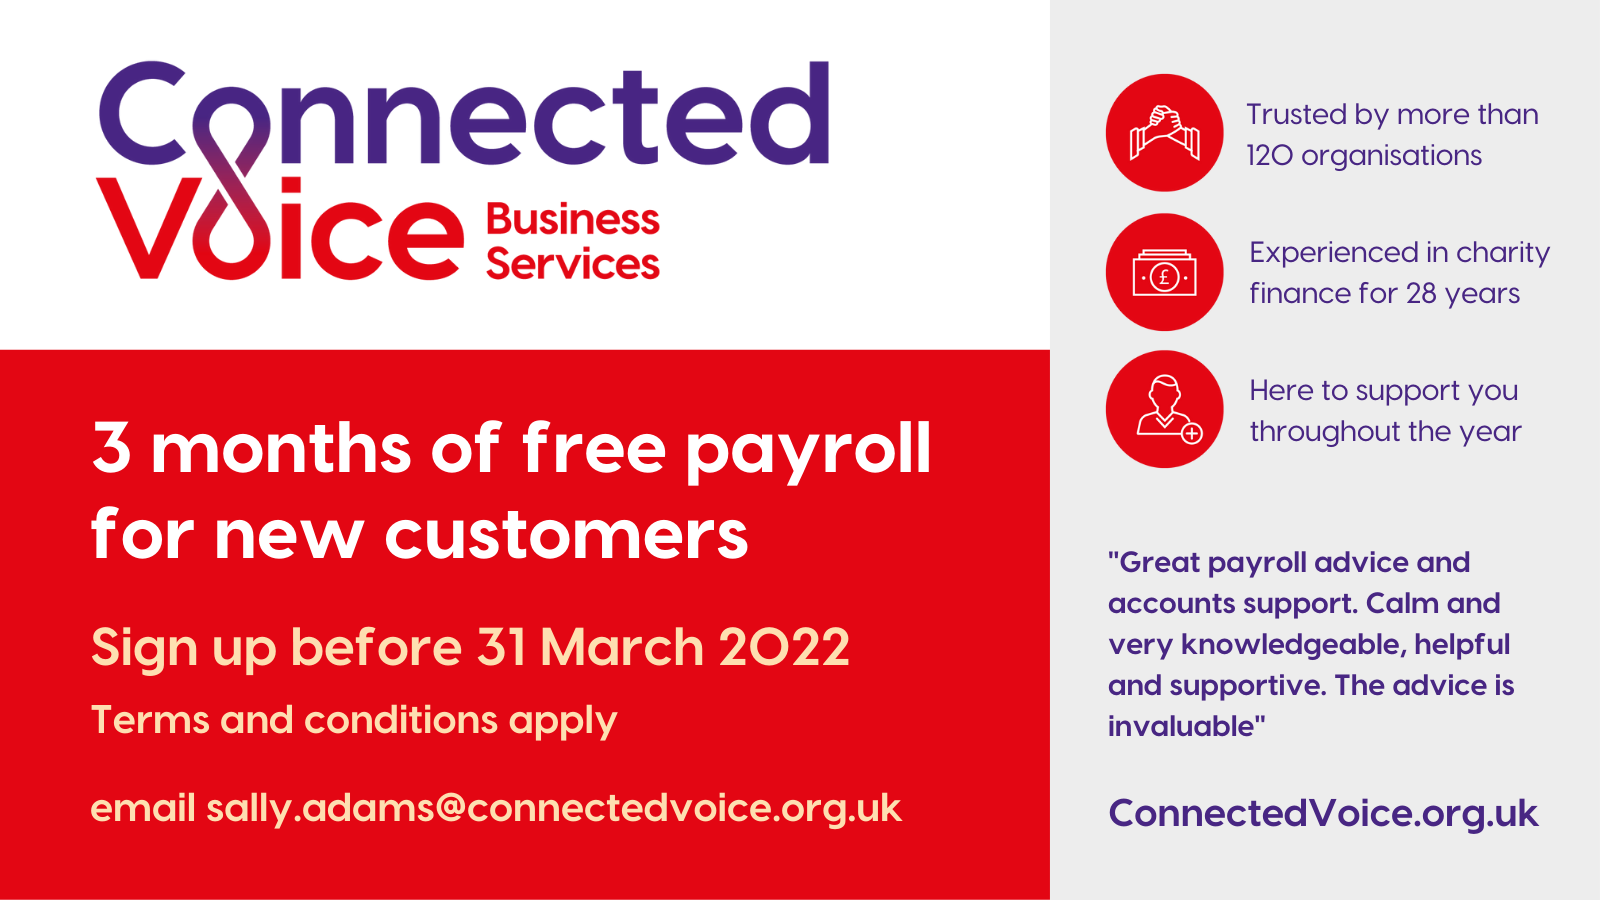 Image of the offer described above alongside Business Services logo